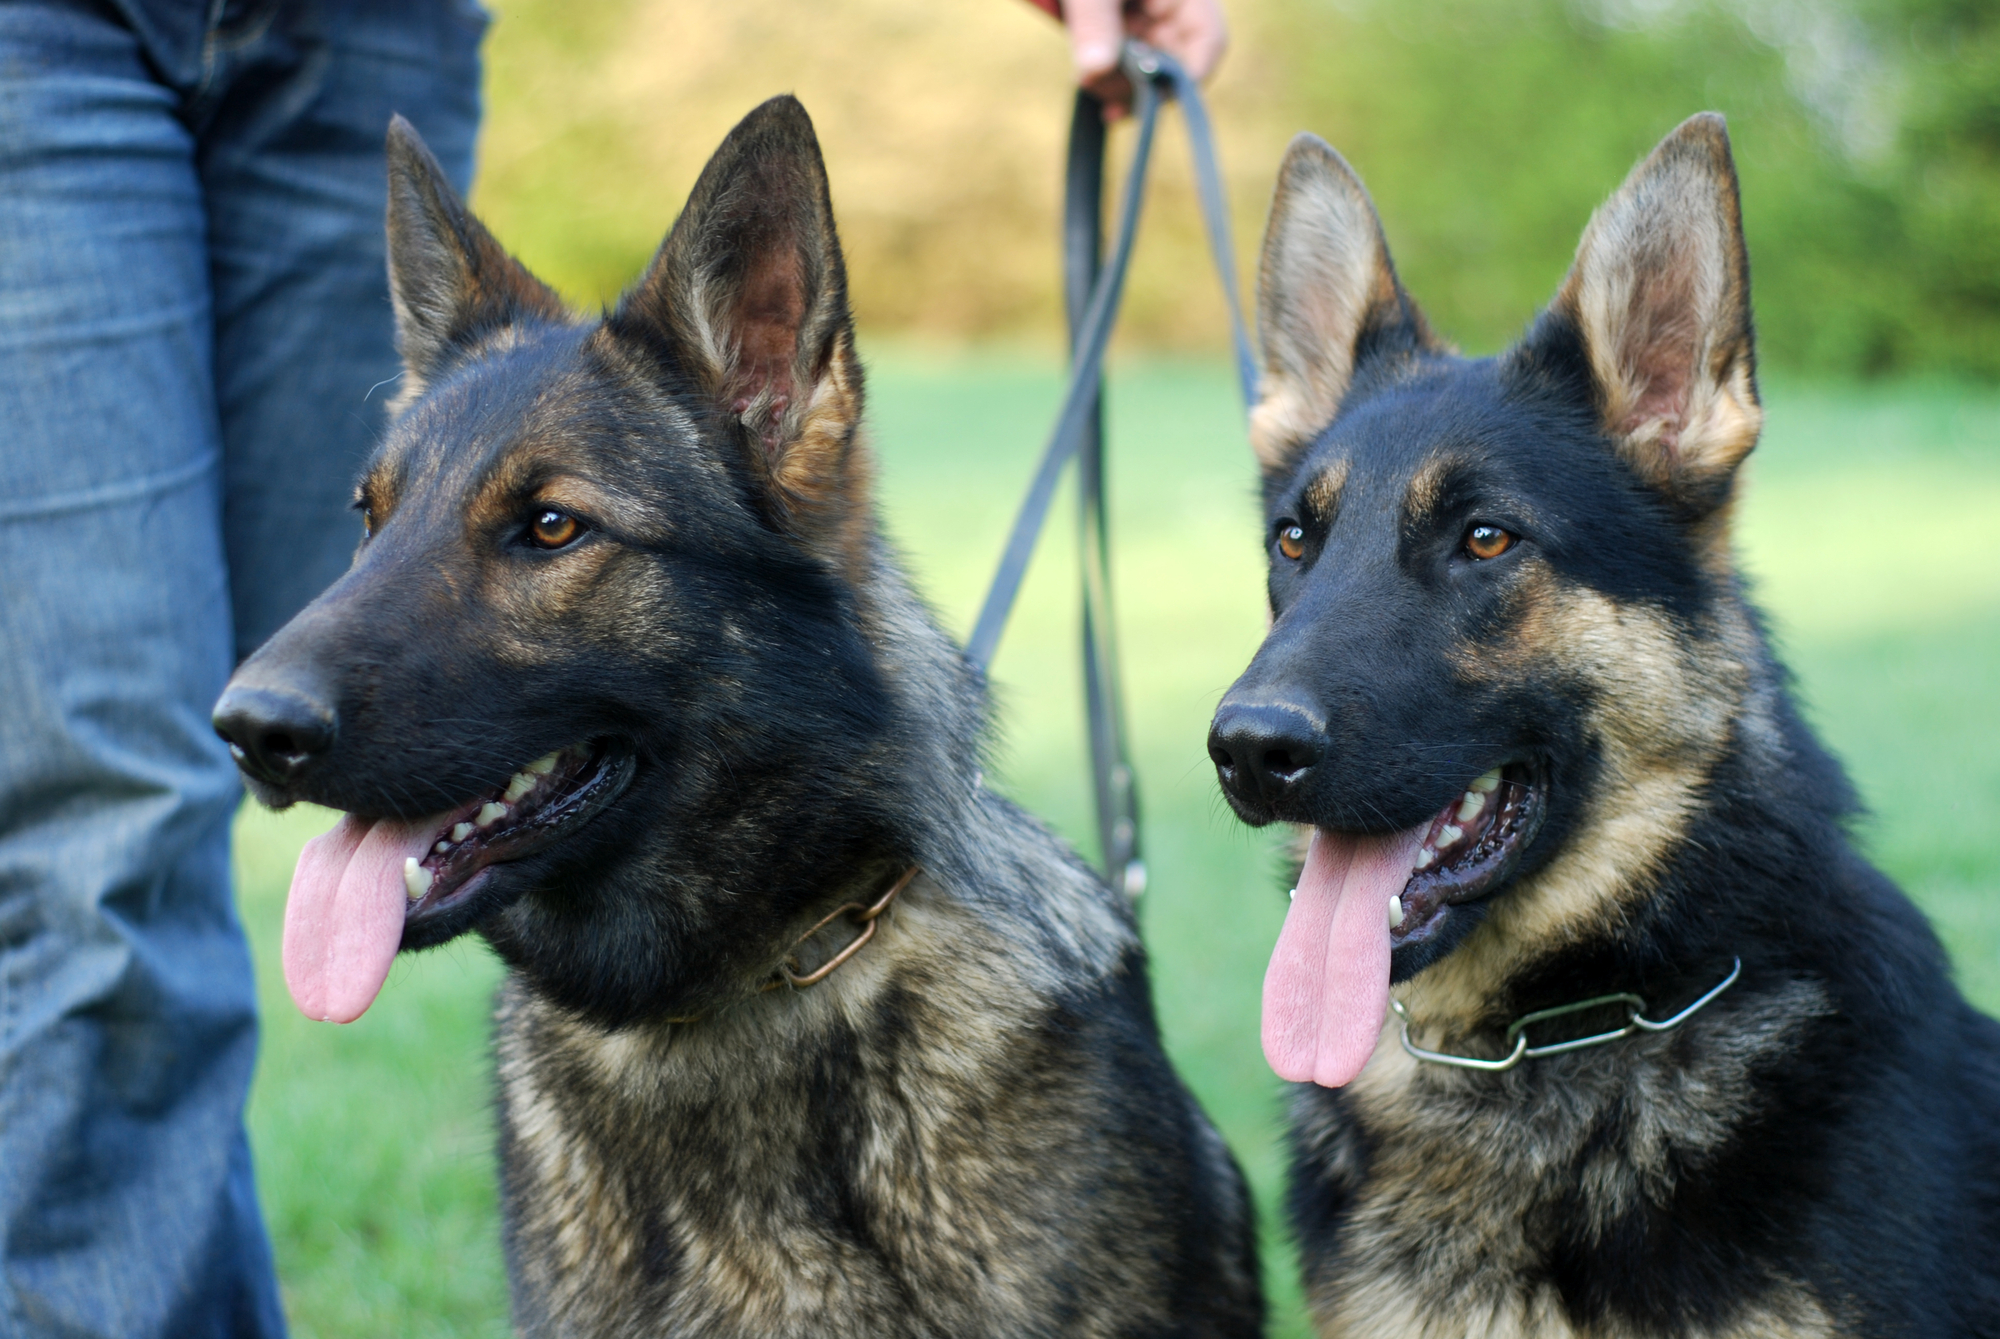 Two alert German Shepherds with focused gazes, held on leashes by an unseen handler.